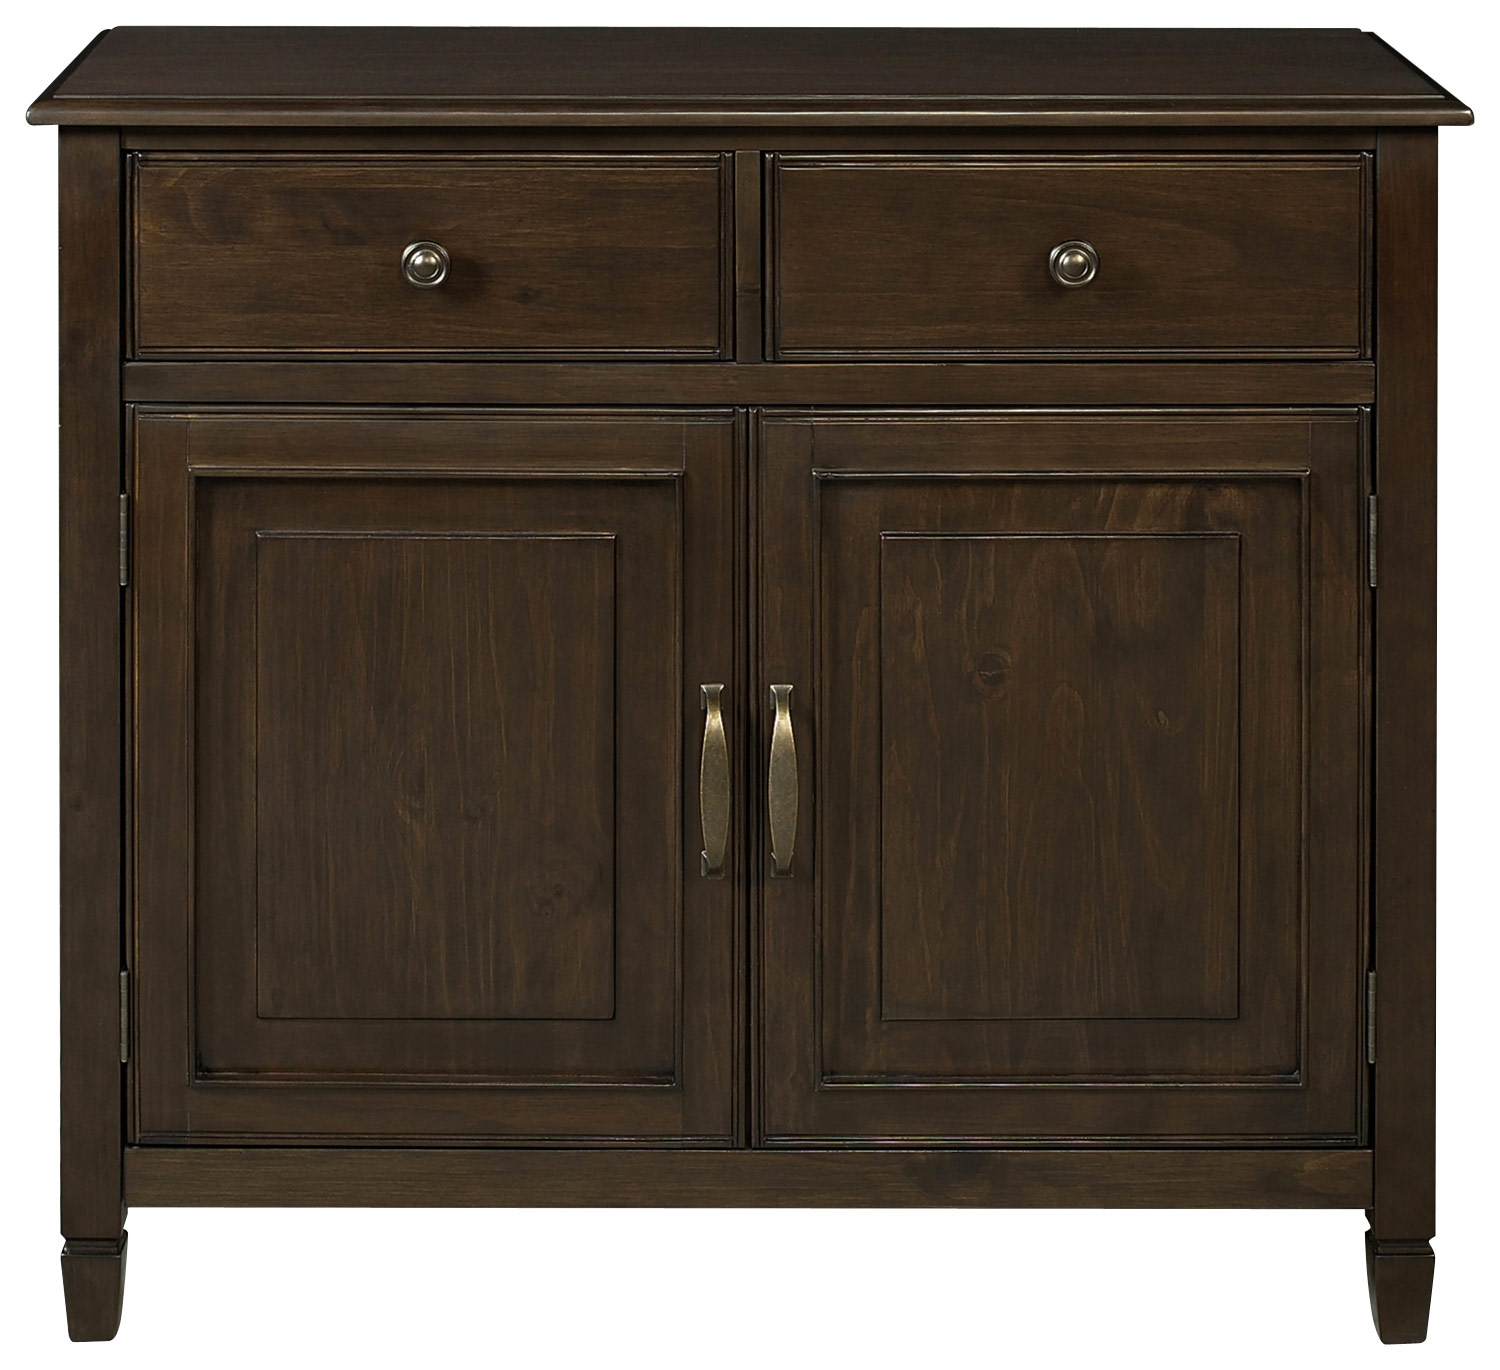 Simpli Home - Connaught Entryway Storage Cabinet - Dark Chestnut Brown was $445.99 now $335.99 (25.0% off)